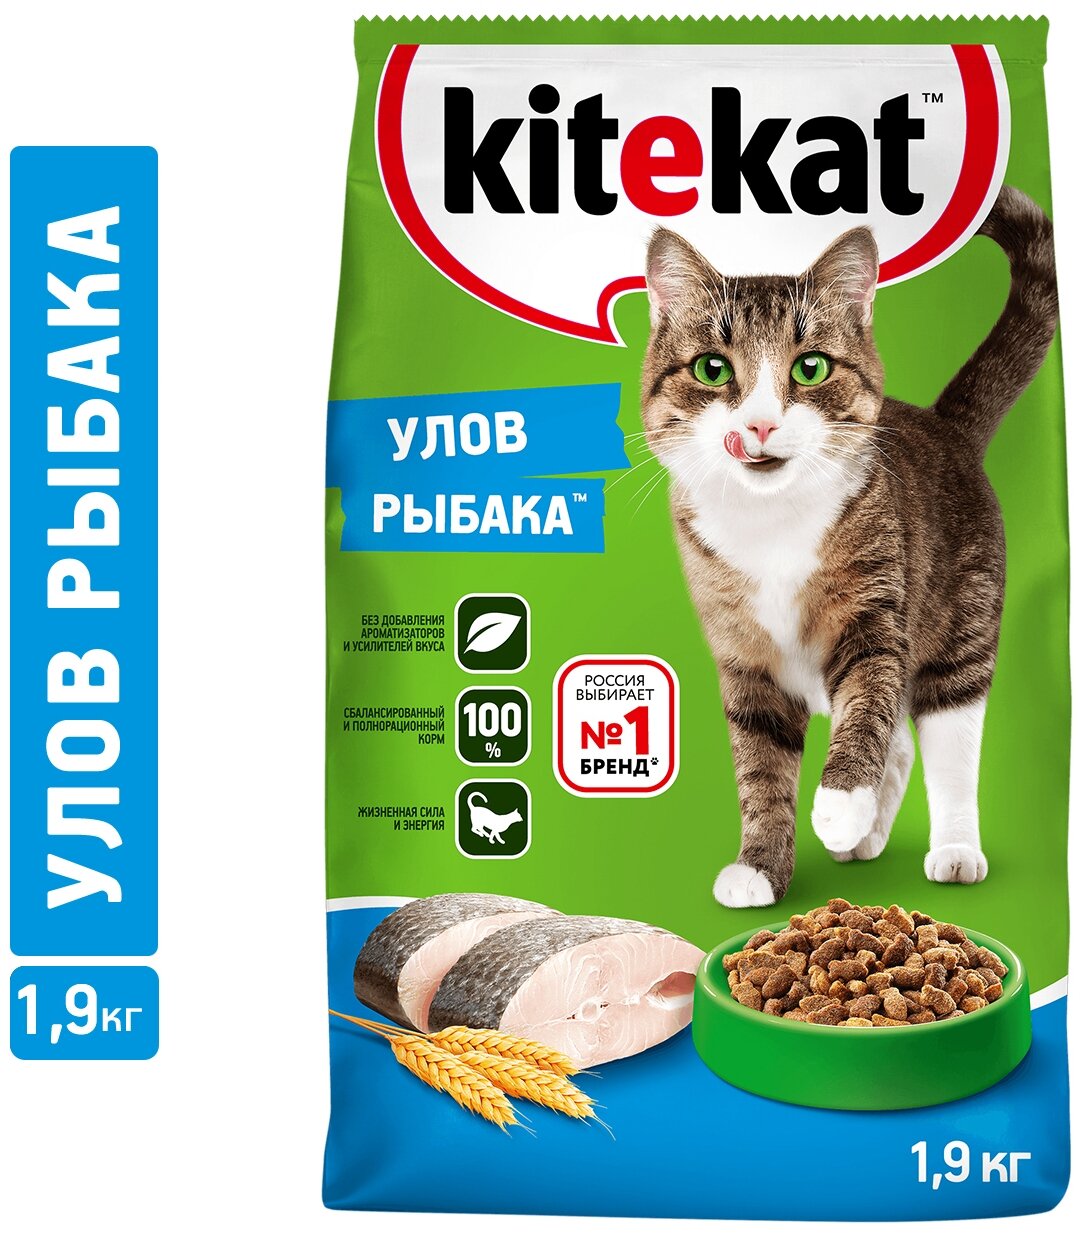 Kitekat корм для взрослых кошек, улов рыбака 1,9 кг